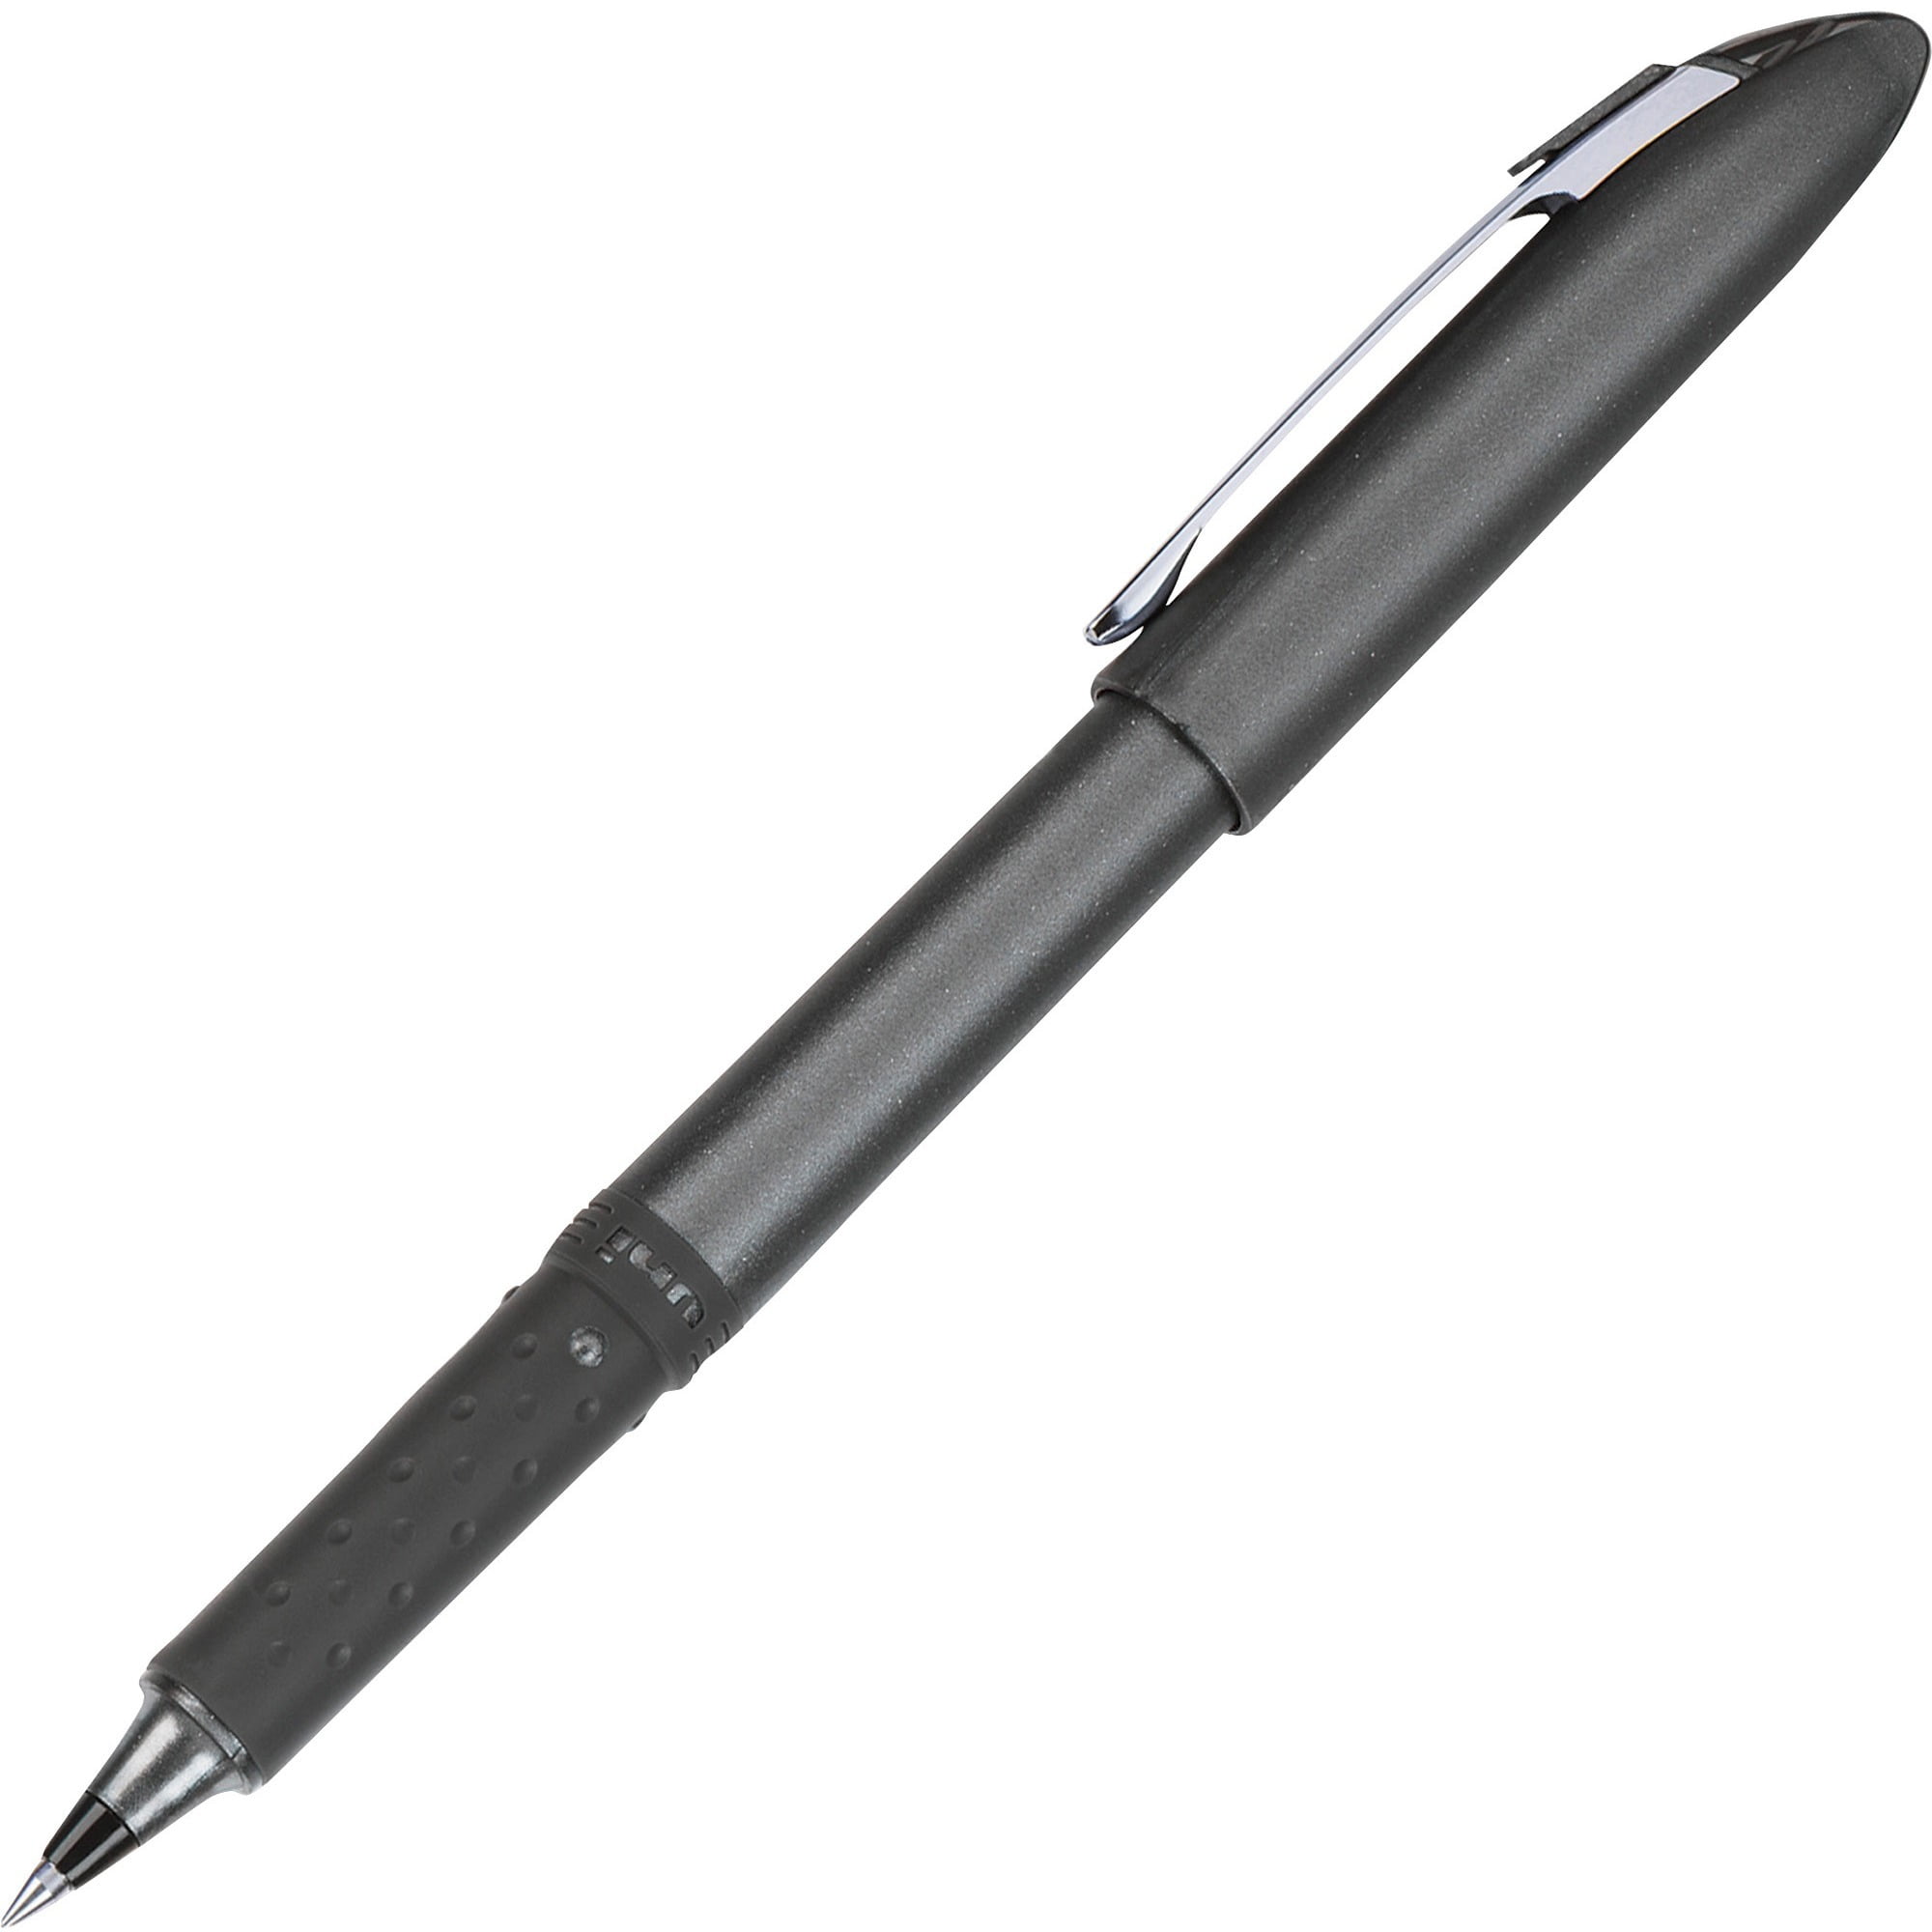  Abaokai Black Ink Ballpoint Pens 1mm, Medium Point Gel Pens  Black Ink Work Pen with Super Soft Grip Ball Point Pens for Men Women  Retractable Office Pens (4 Pack) 